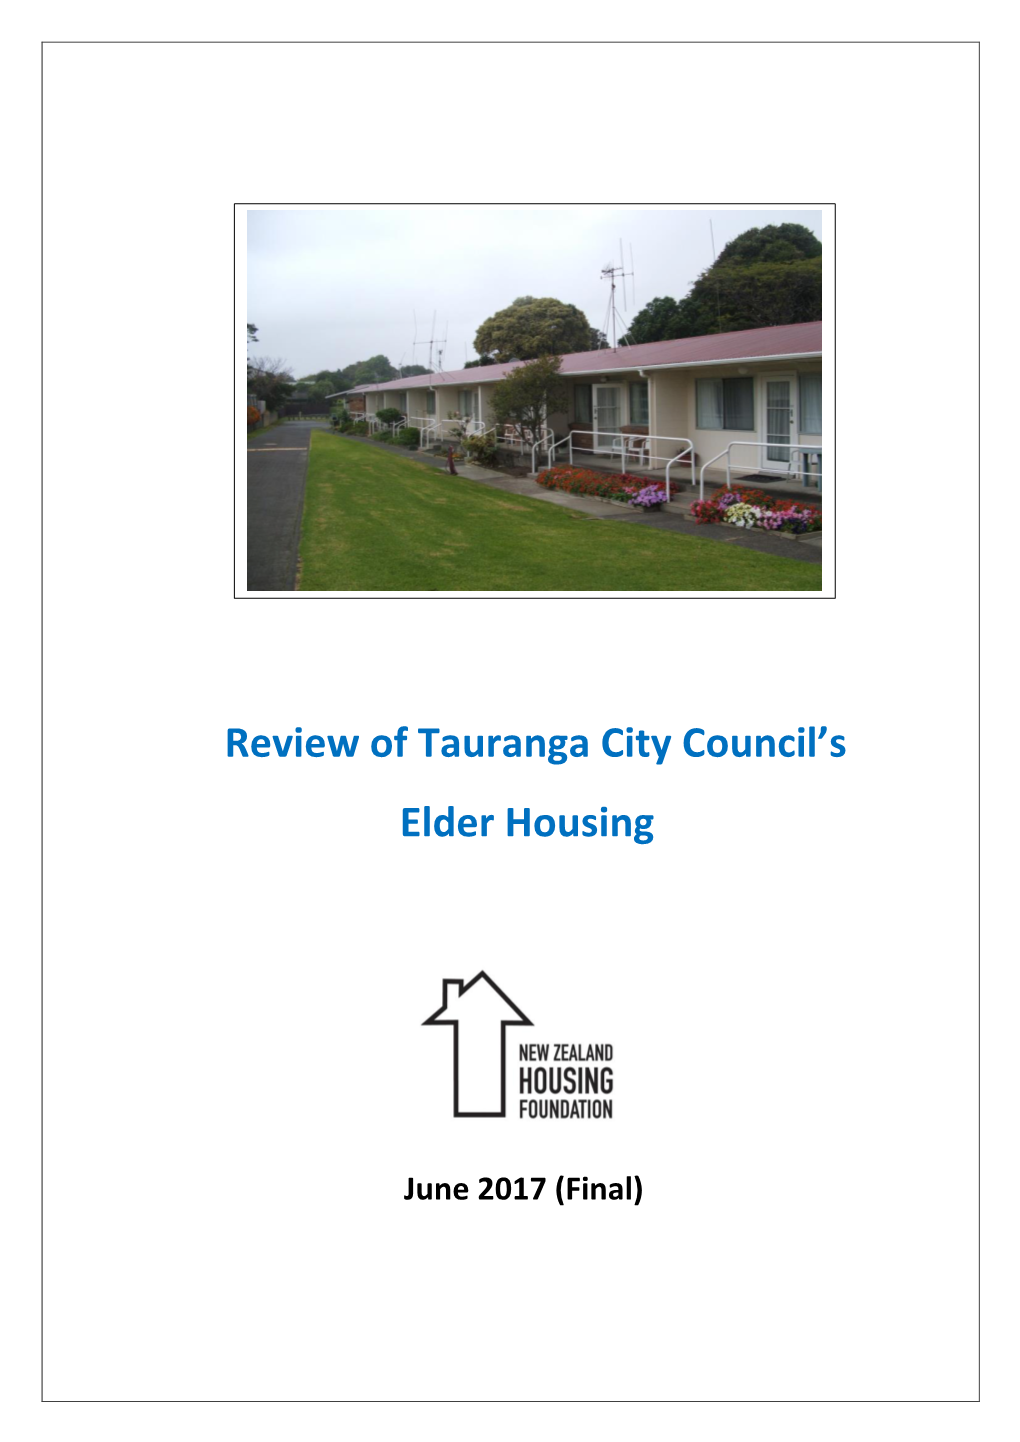 Review of Tauranga City Council's Elder Housing